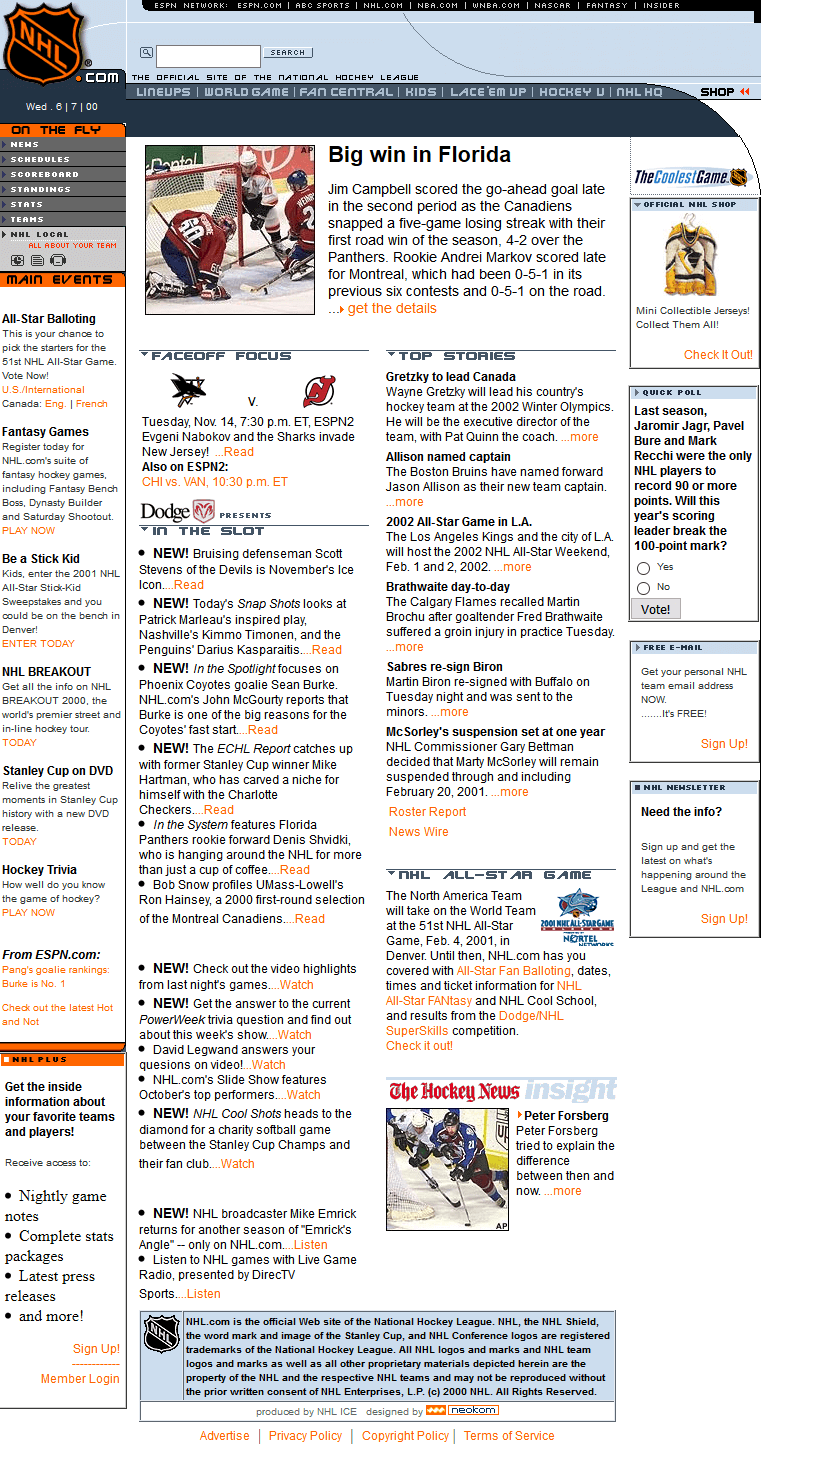 NHL website in 2000